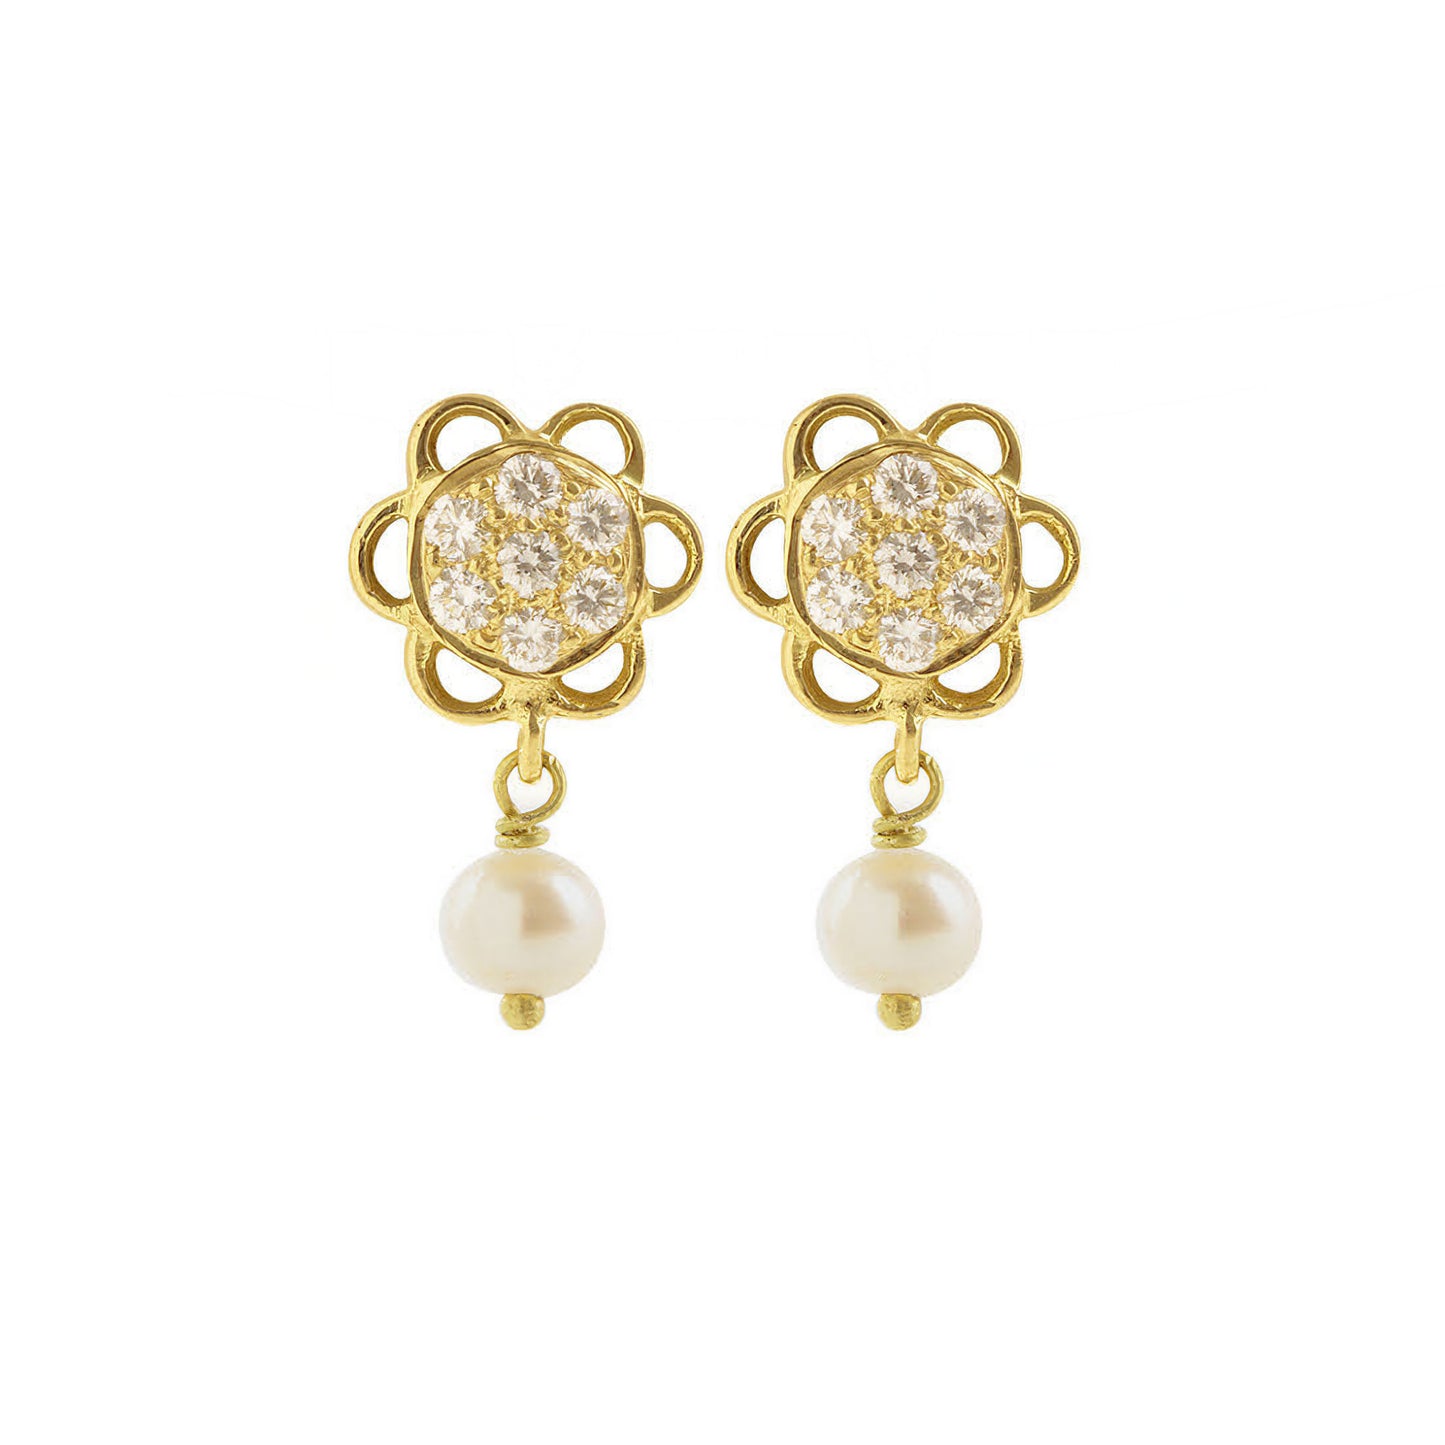 The Babyrasa Kahala Floral Gold and Diamond and Pearl Ear Studs by Rasvihar